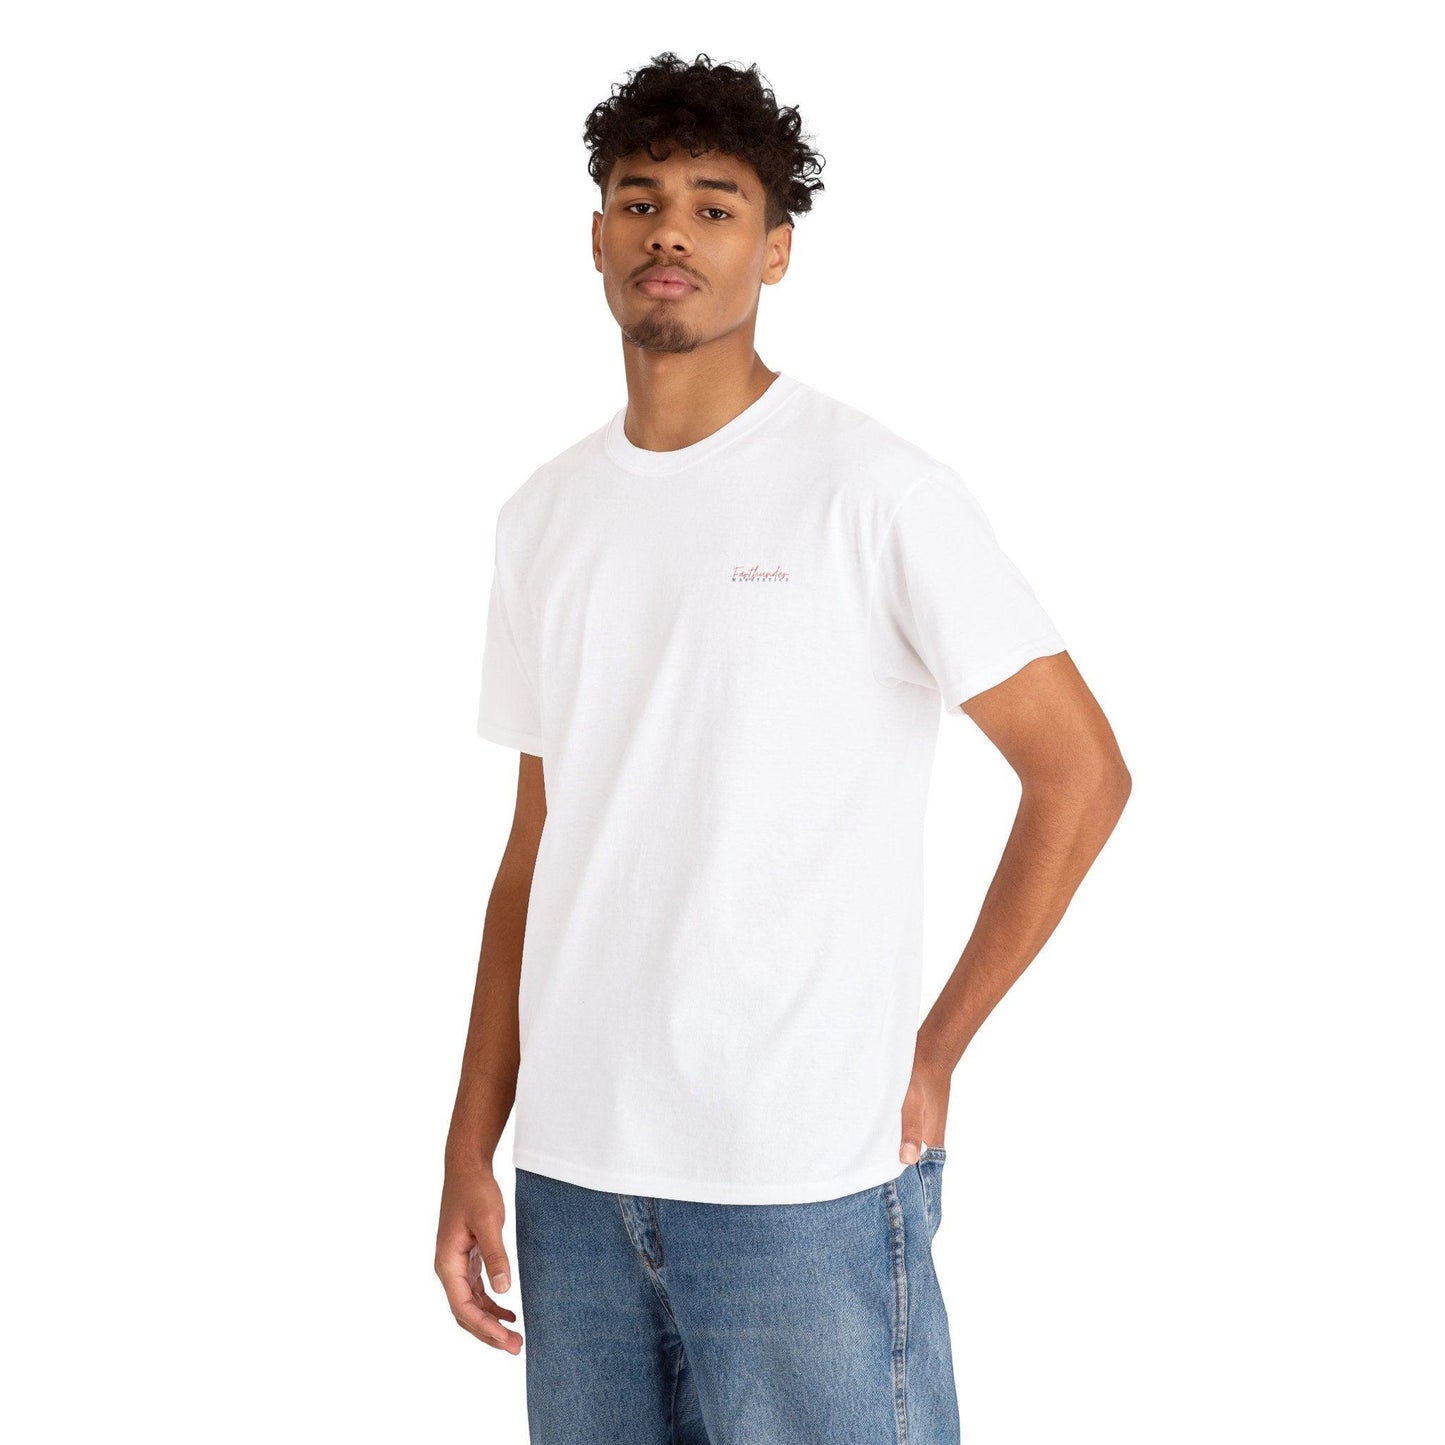 Kaizen Mindset T-shirt white – Warsteticz